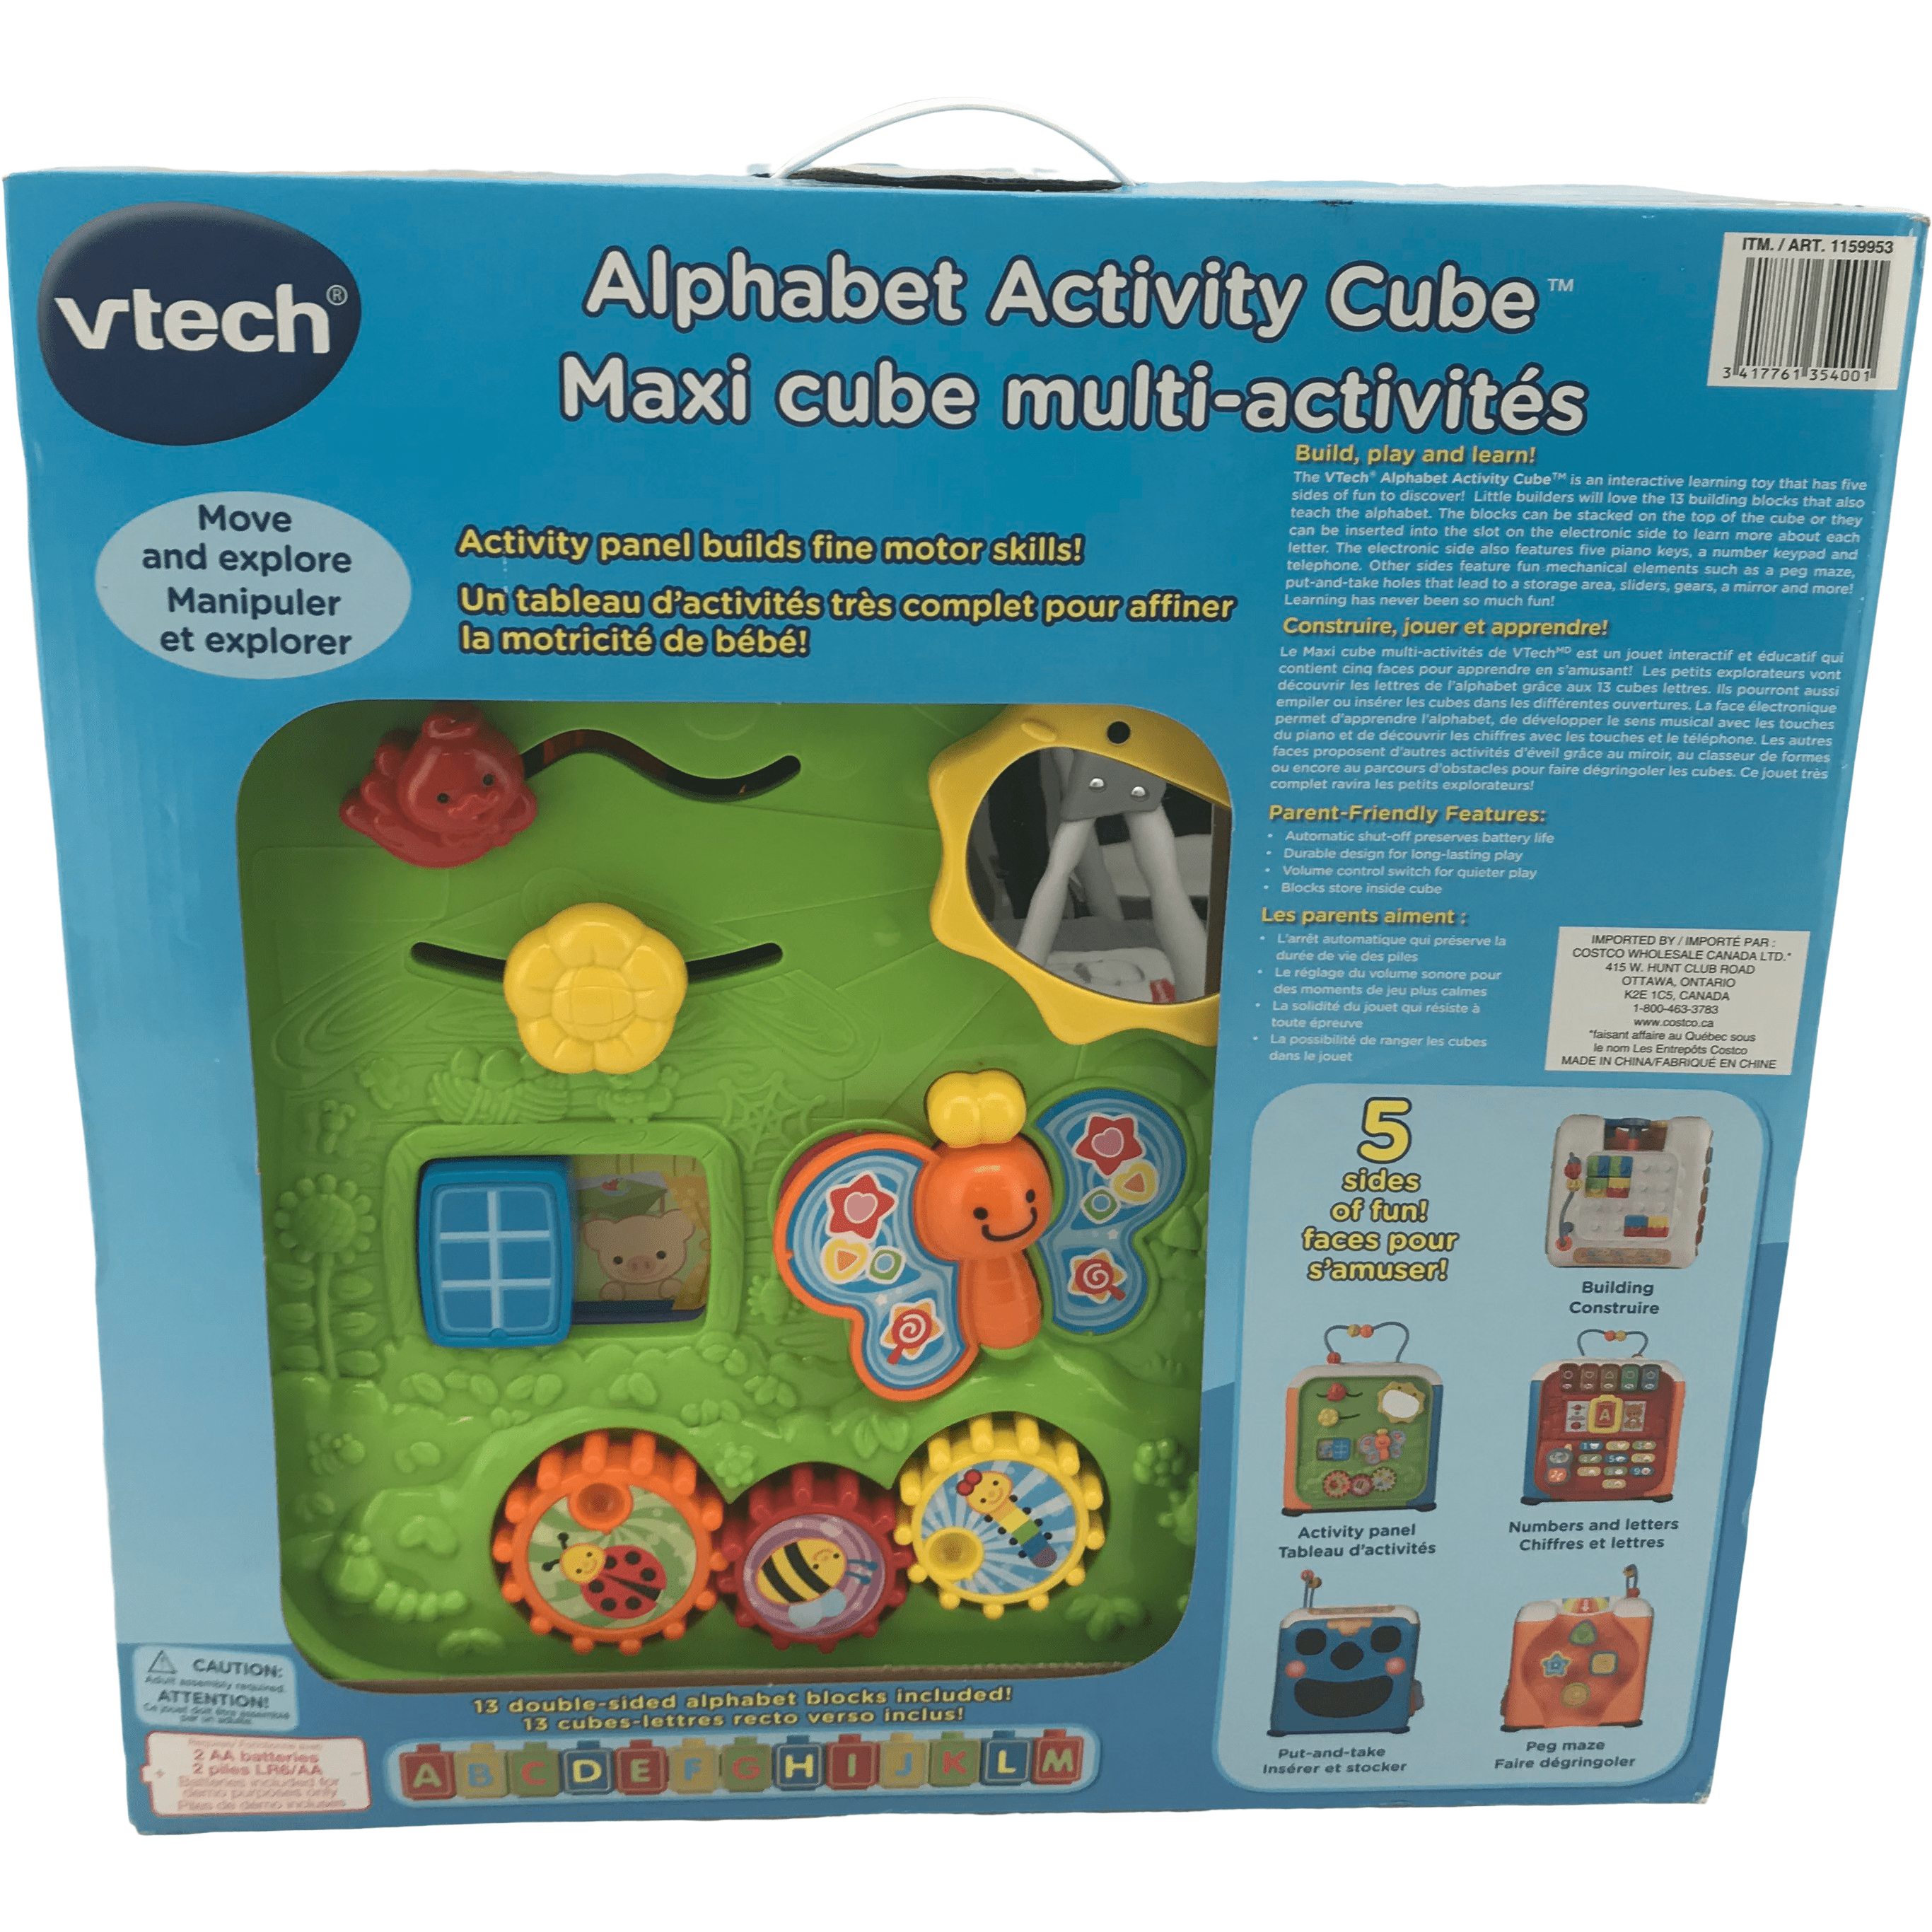 Vtech Alphabet Activity Cube: 5 Sides of Play / 9-36 Months **DEALS**